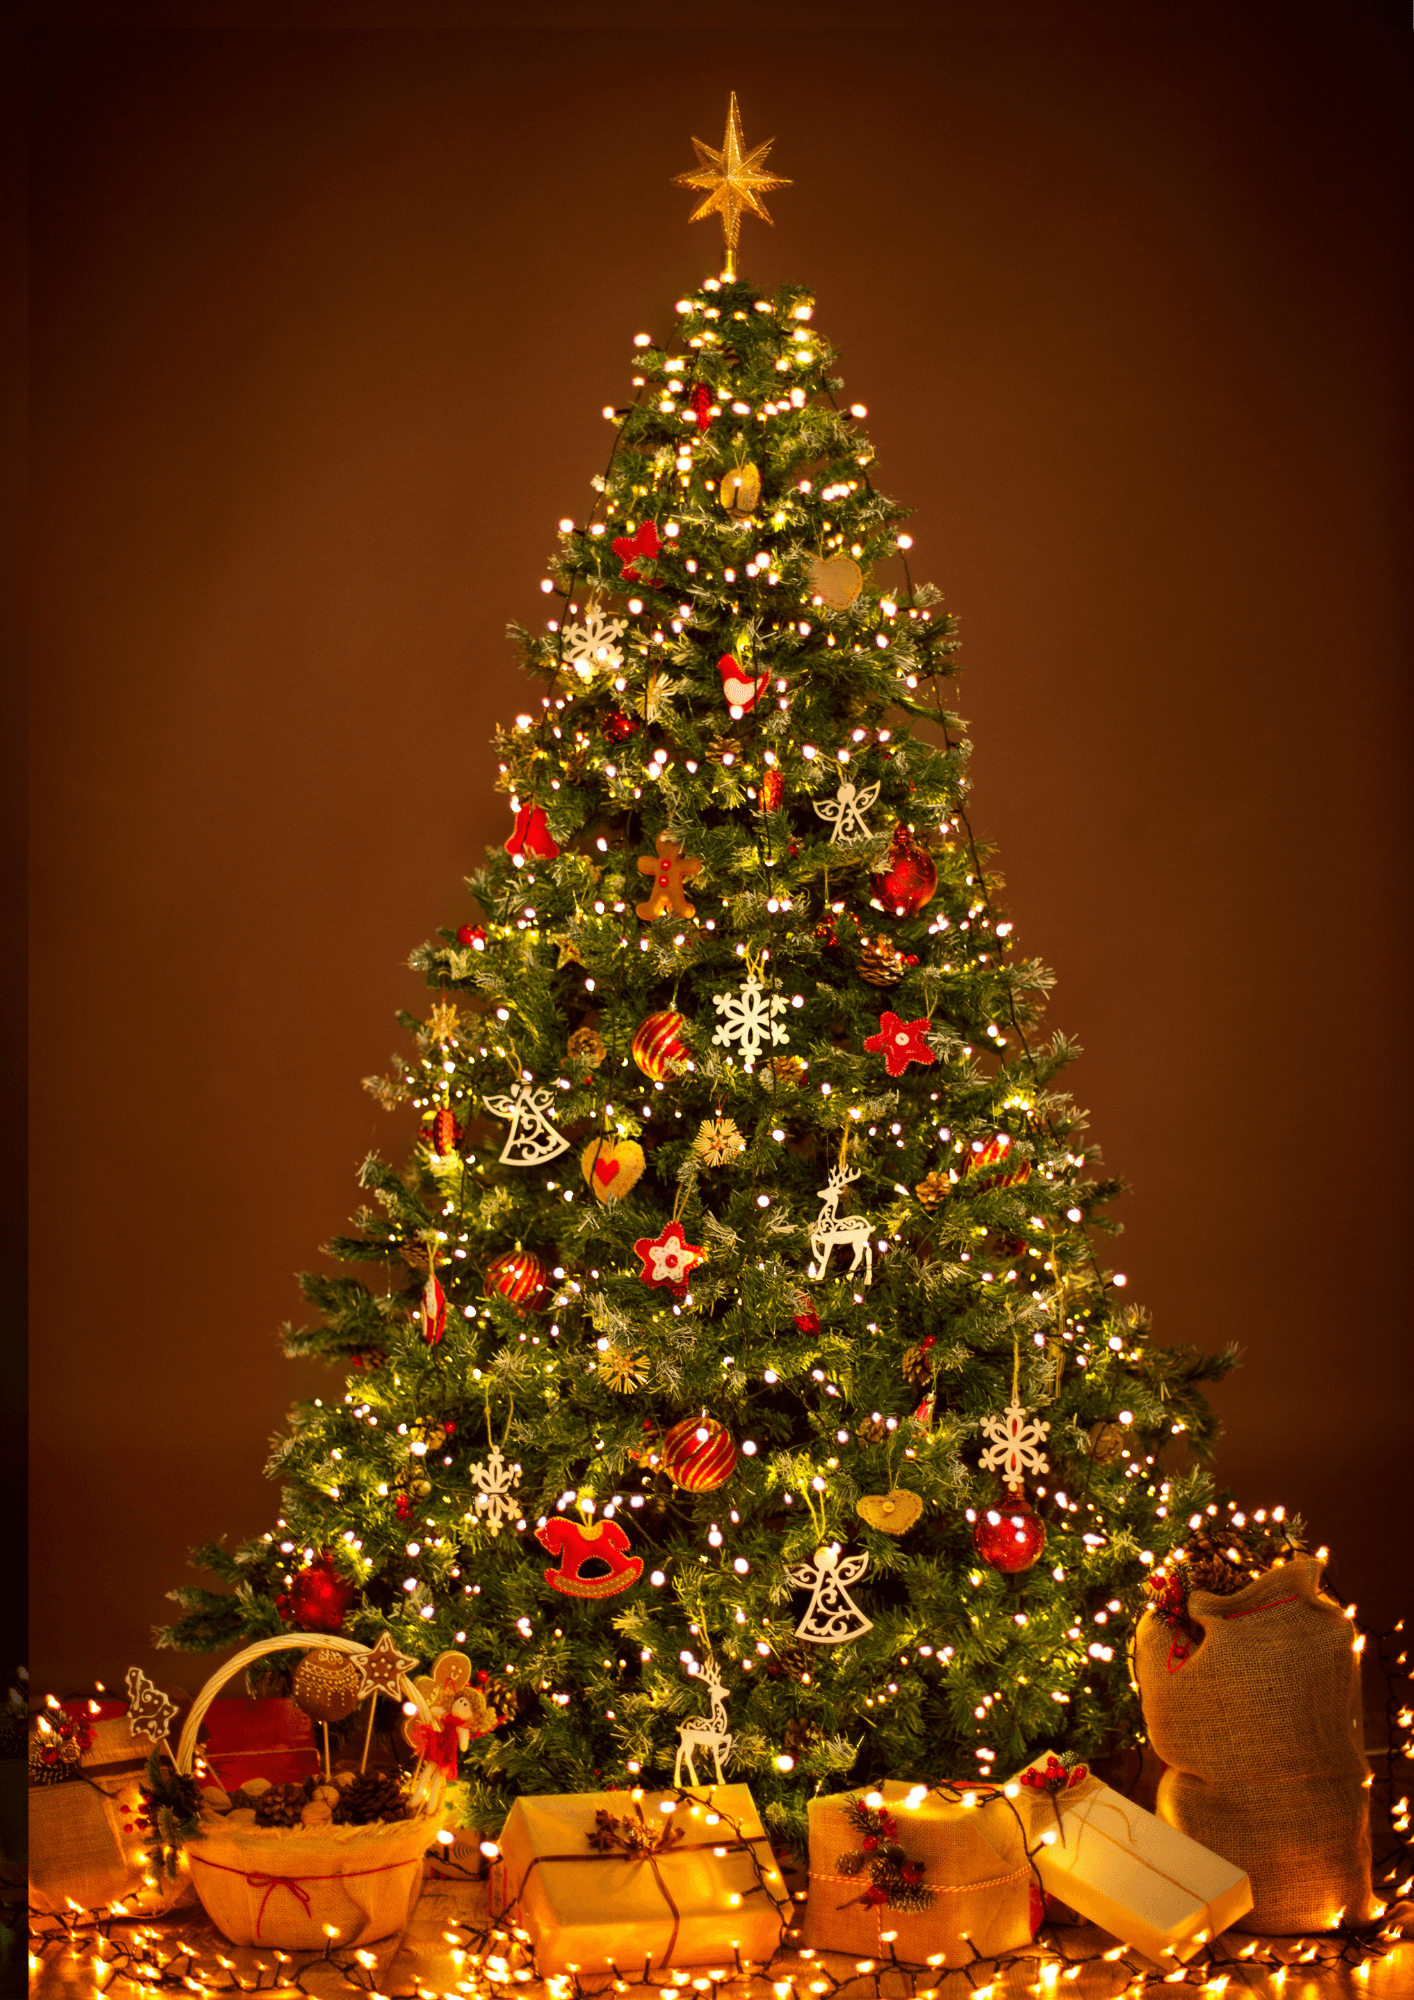 BTTHPK - Christmas Tree